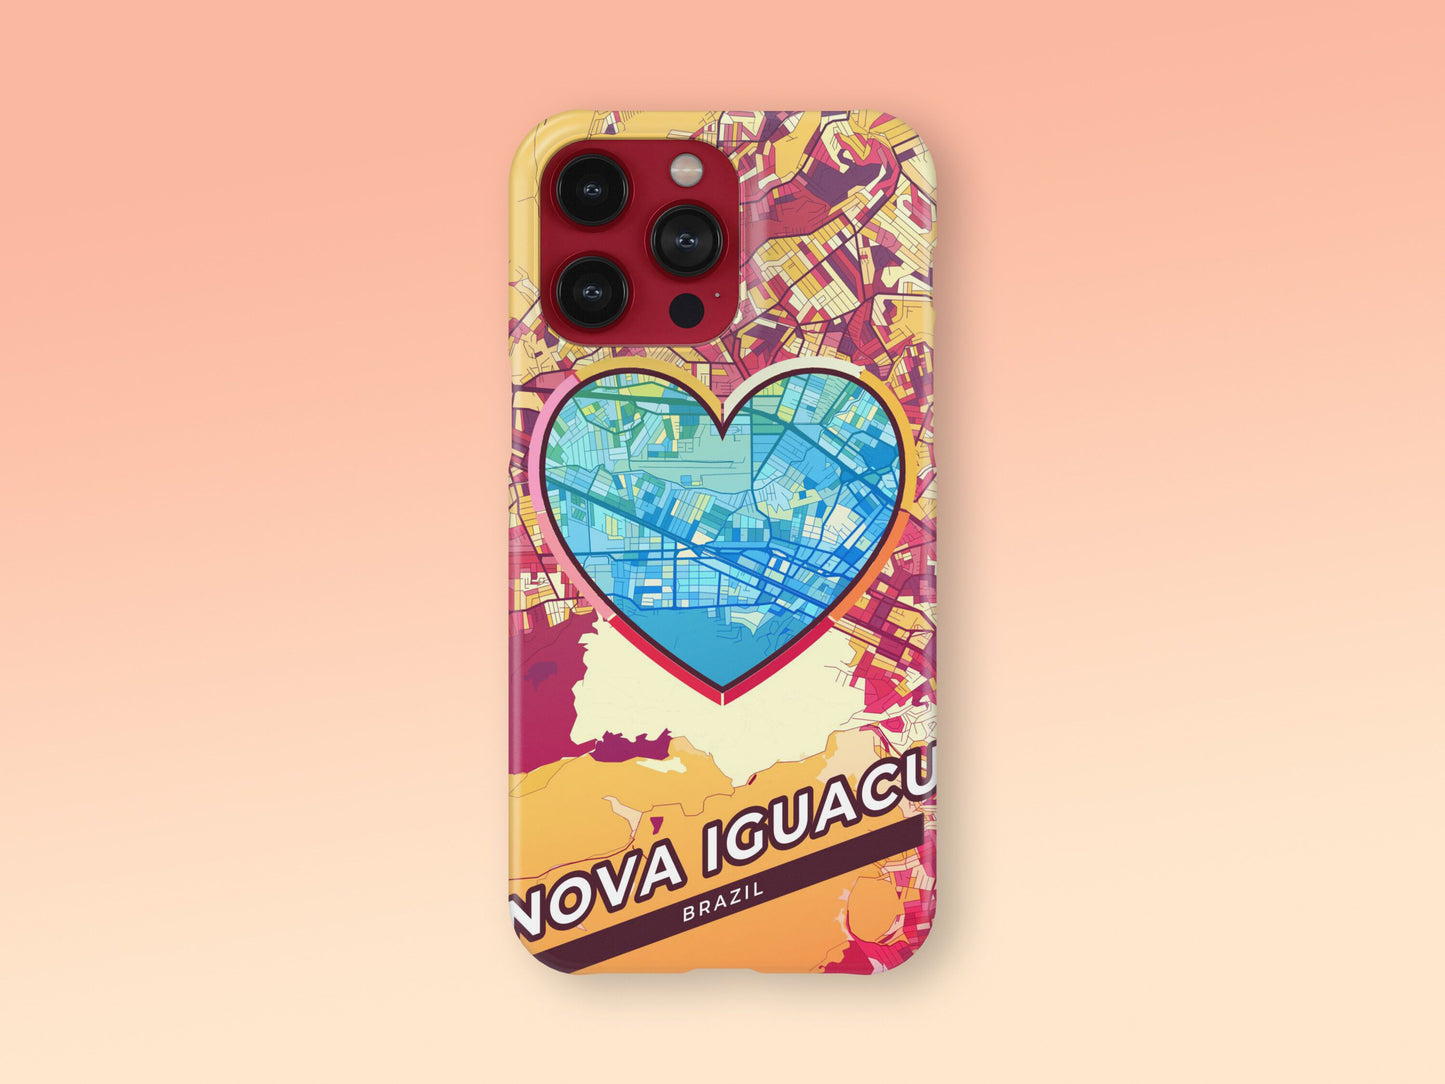 Nova Iguacu Brazil slim phone case with colorful icon 2